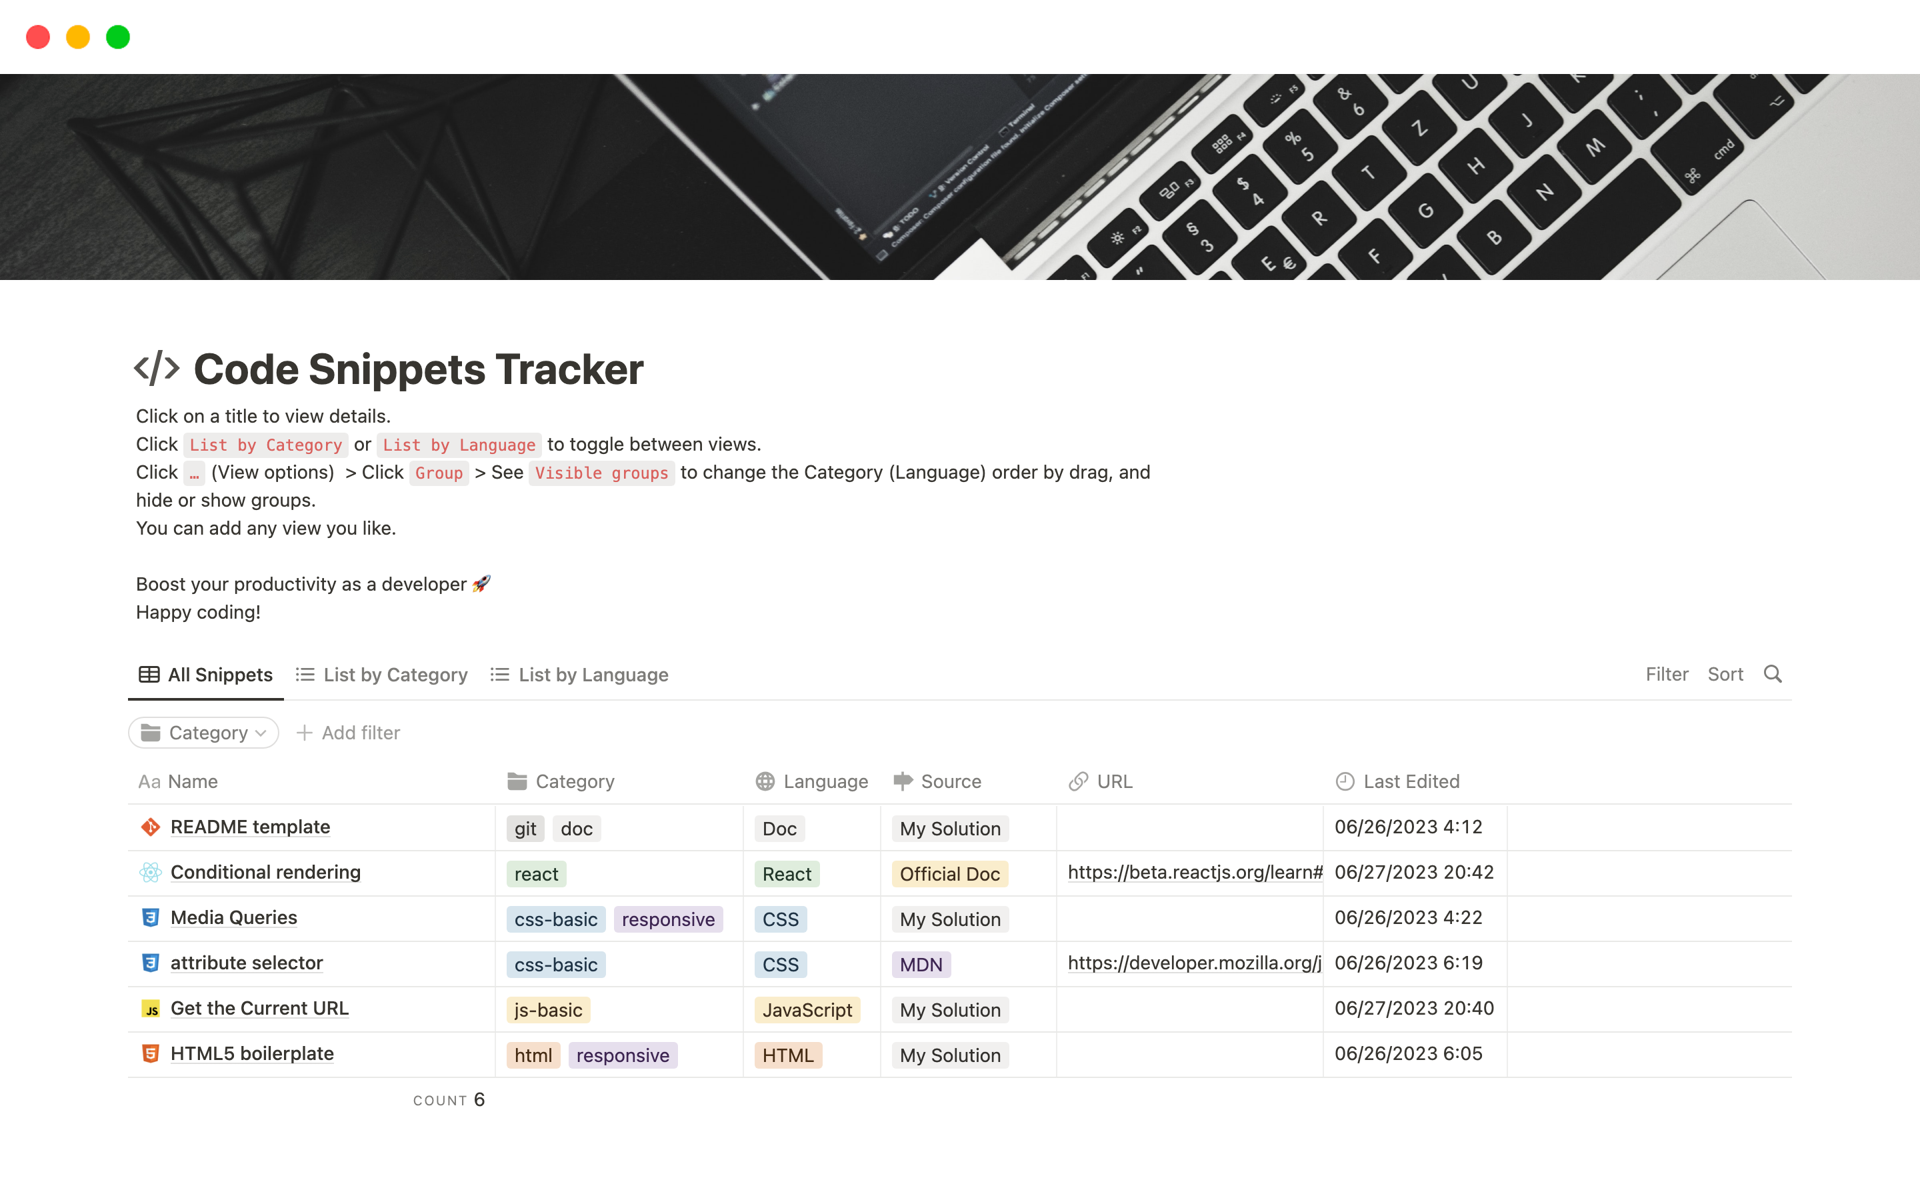 Vista previa de una plantilla para Code Snippets Tracker